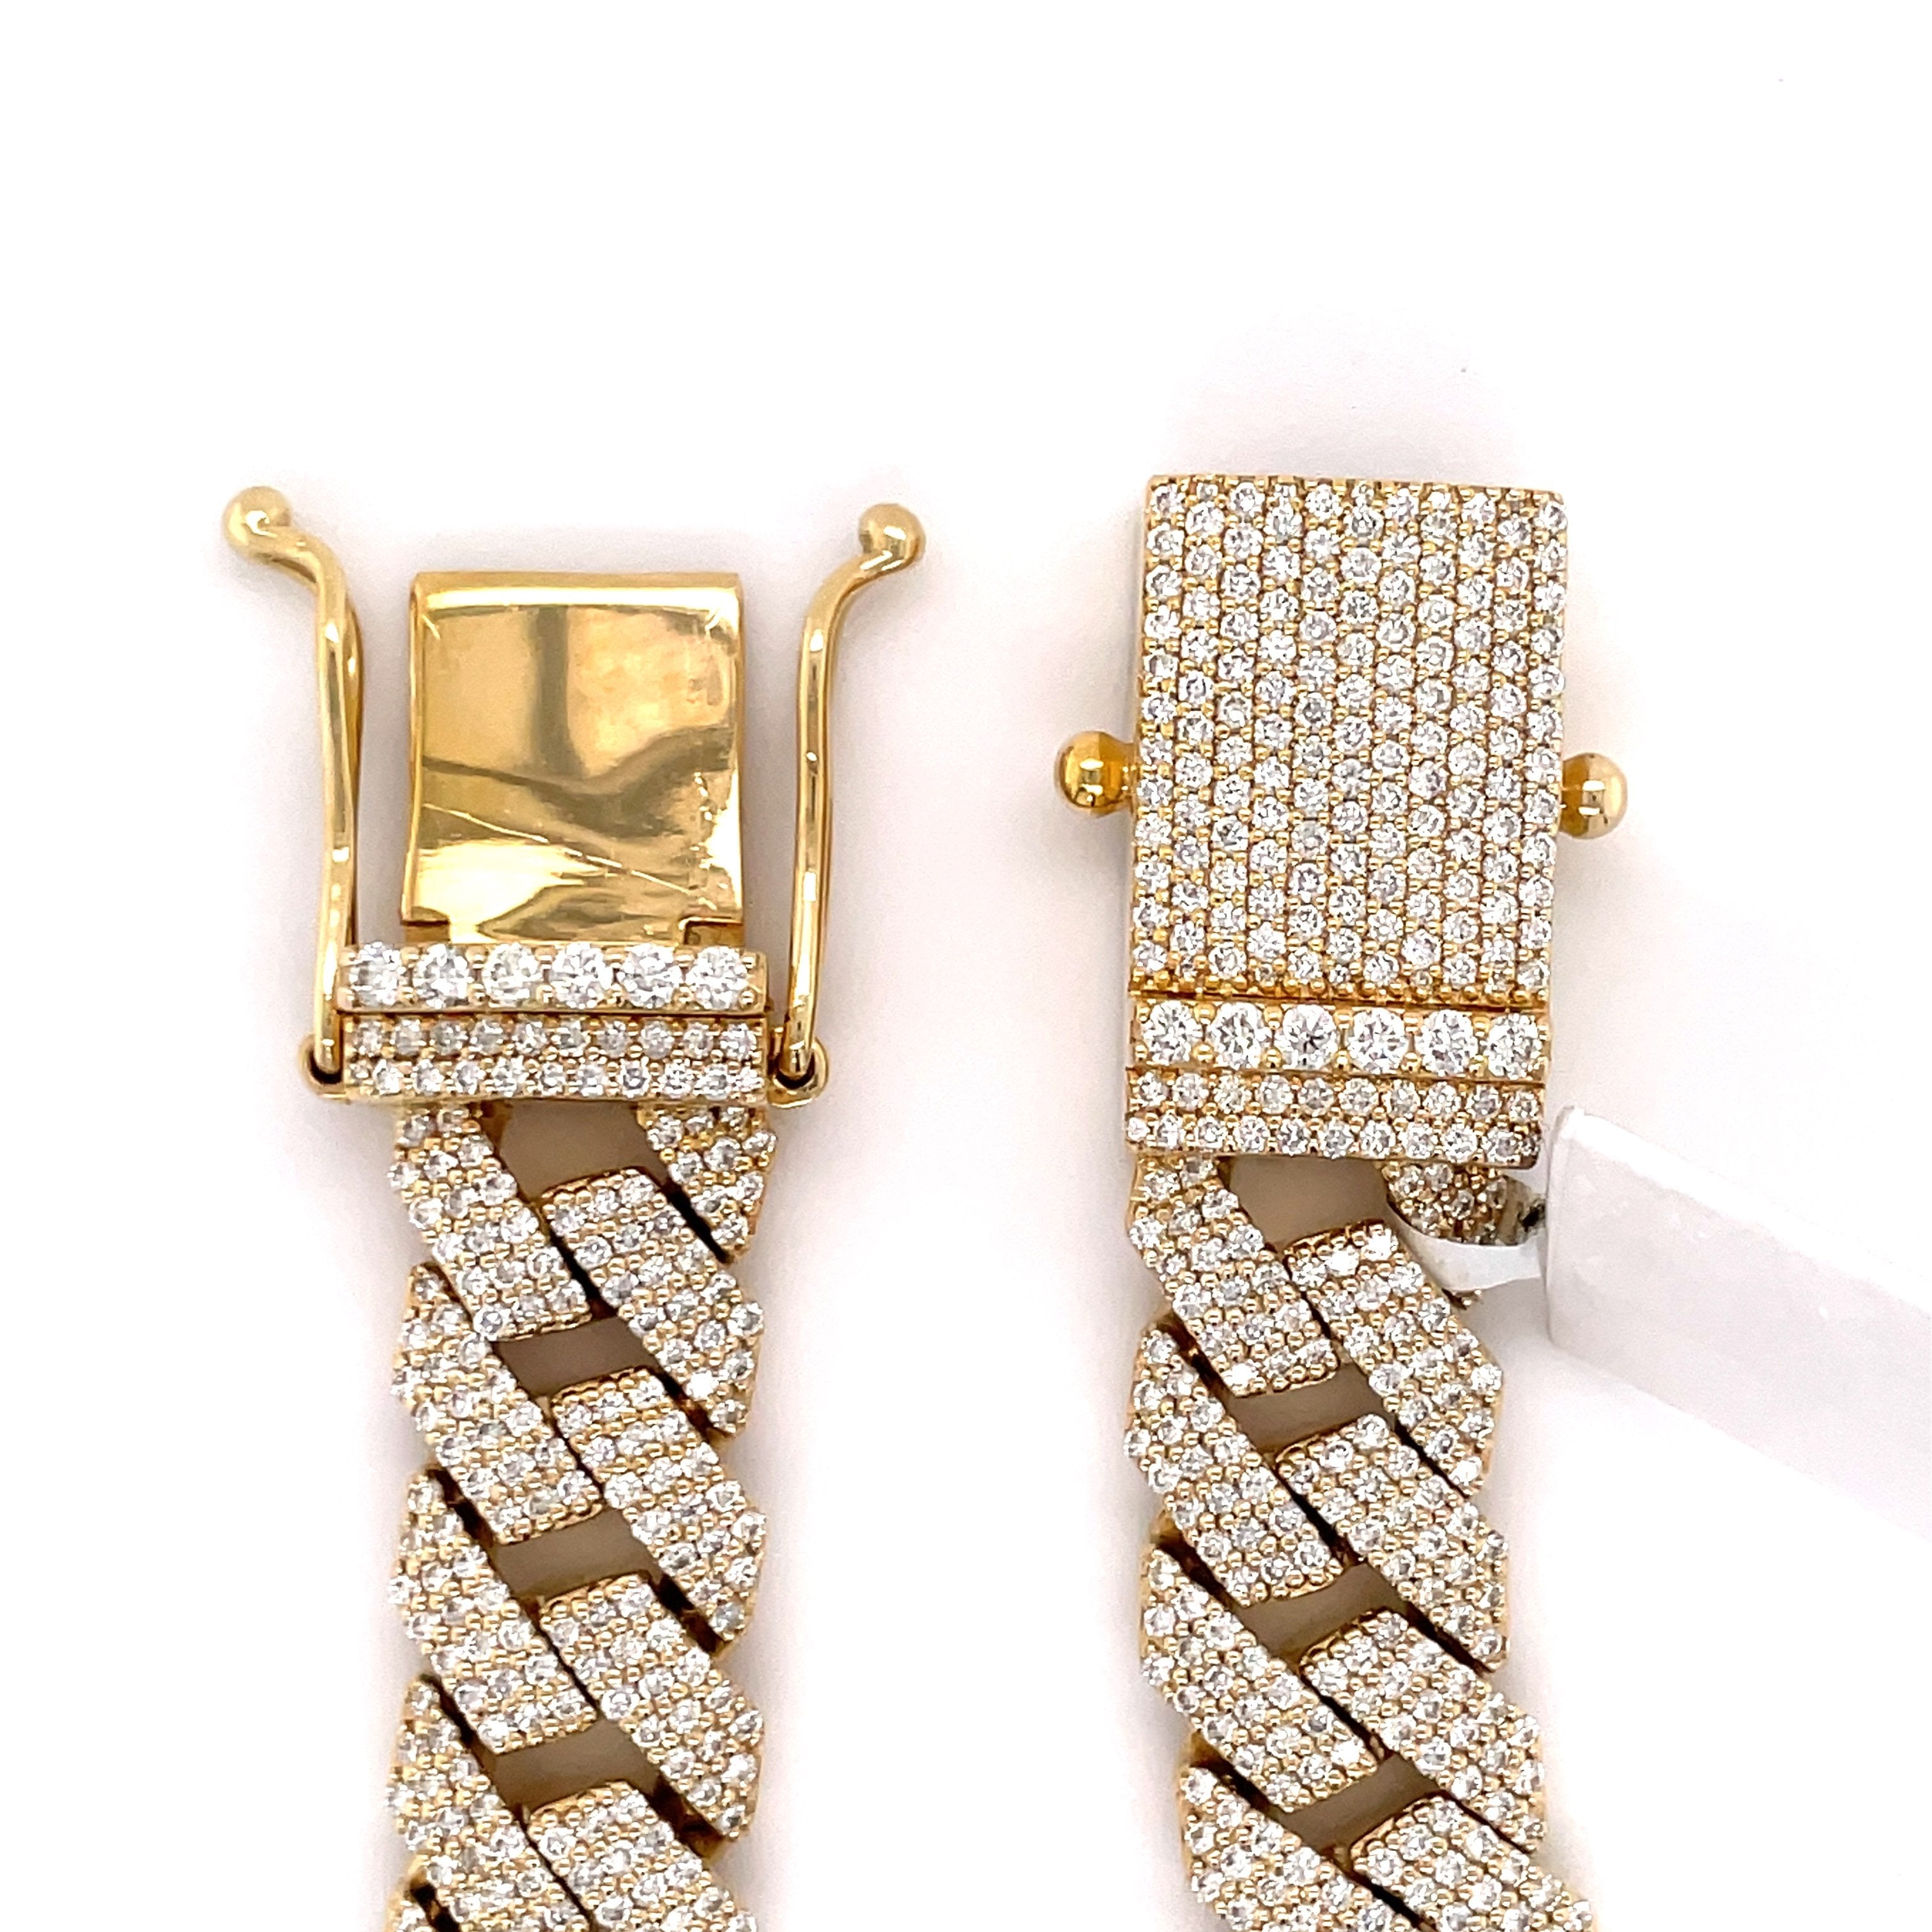 13.00 CT. Diamond Cuban Bracelet in Gold - 14.00mm - White Carat - USA & Canada